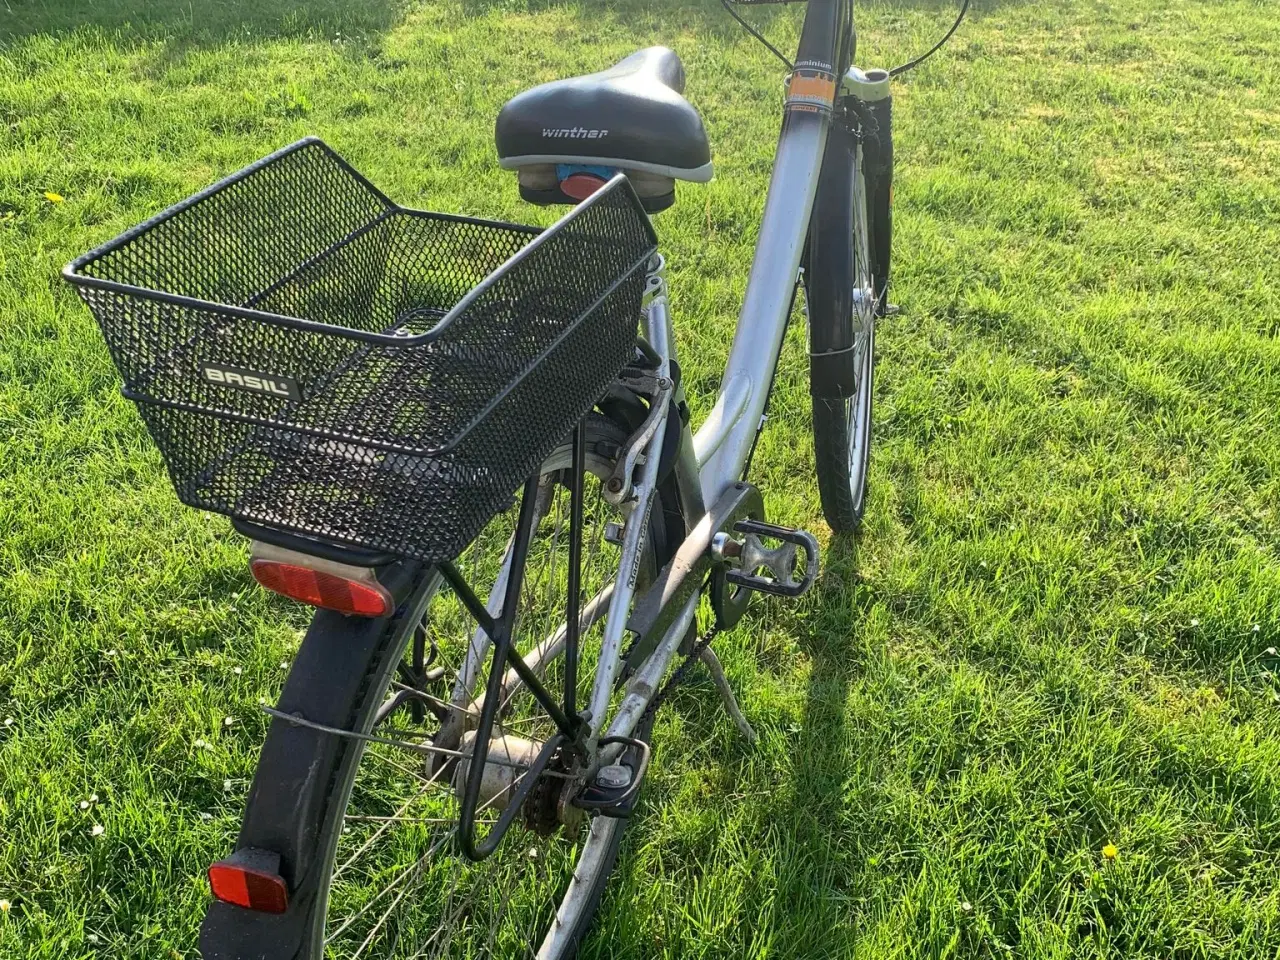 Billede 3 - Shopping-cykel fra Winther